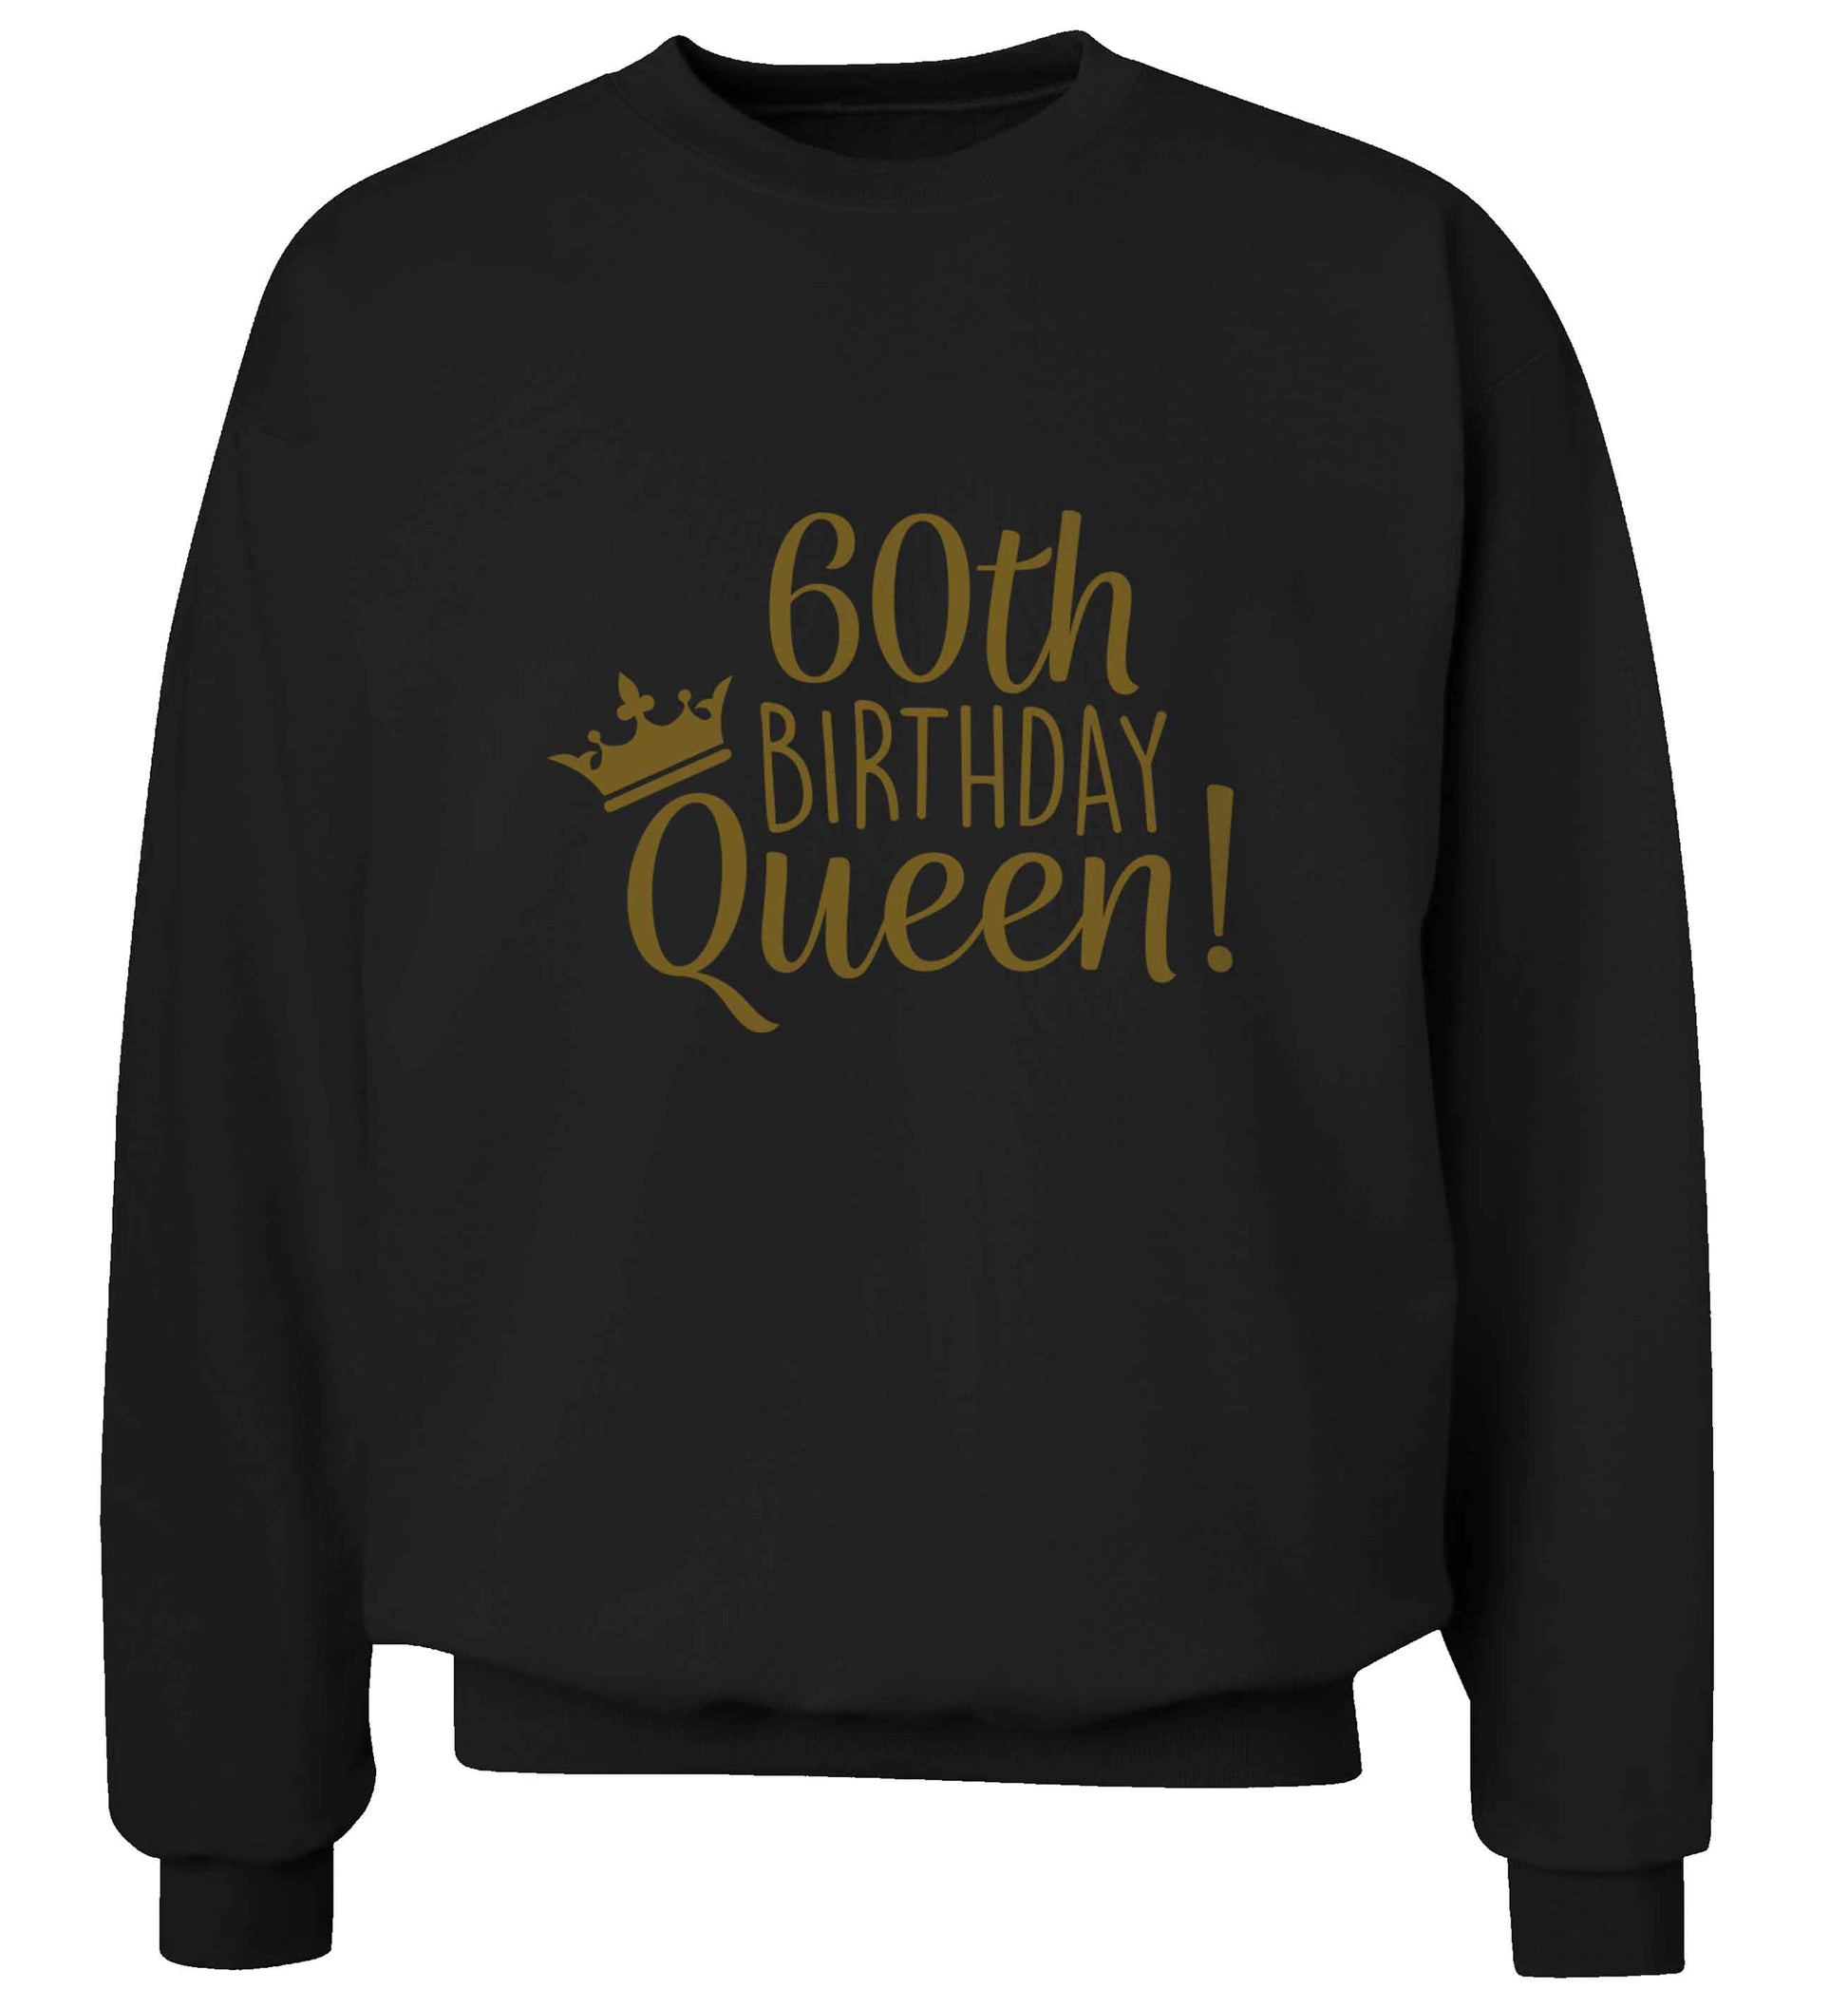 60th birthday Queen adult's unisex black sweater 2XL